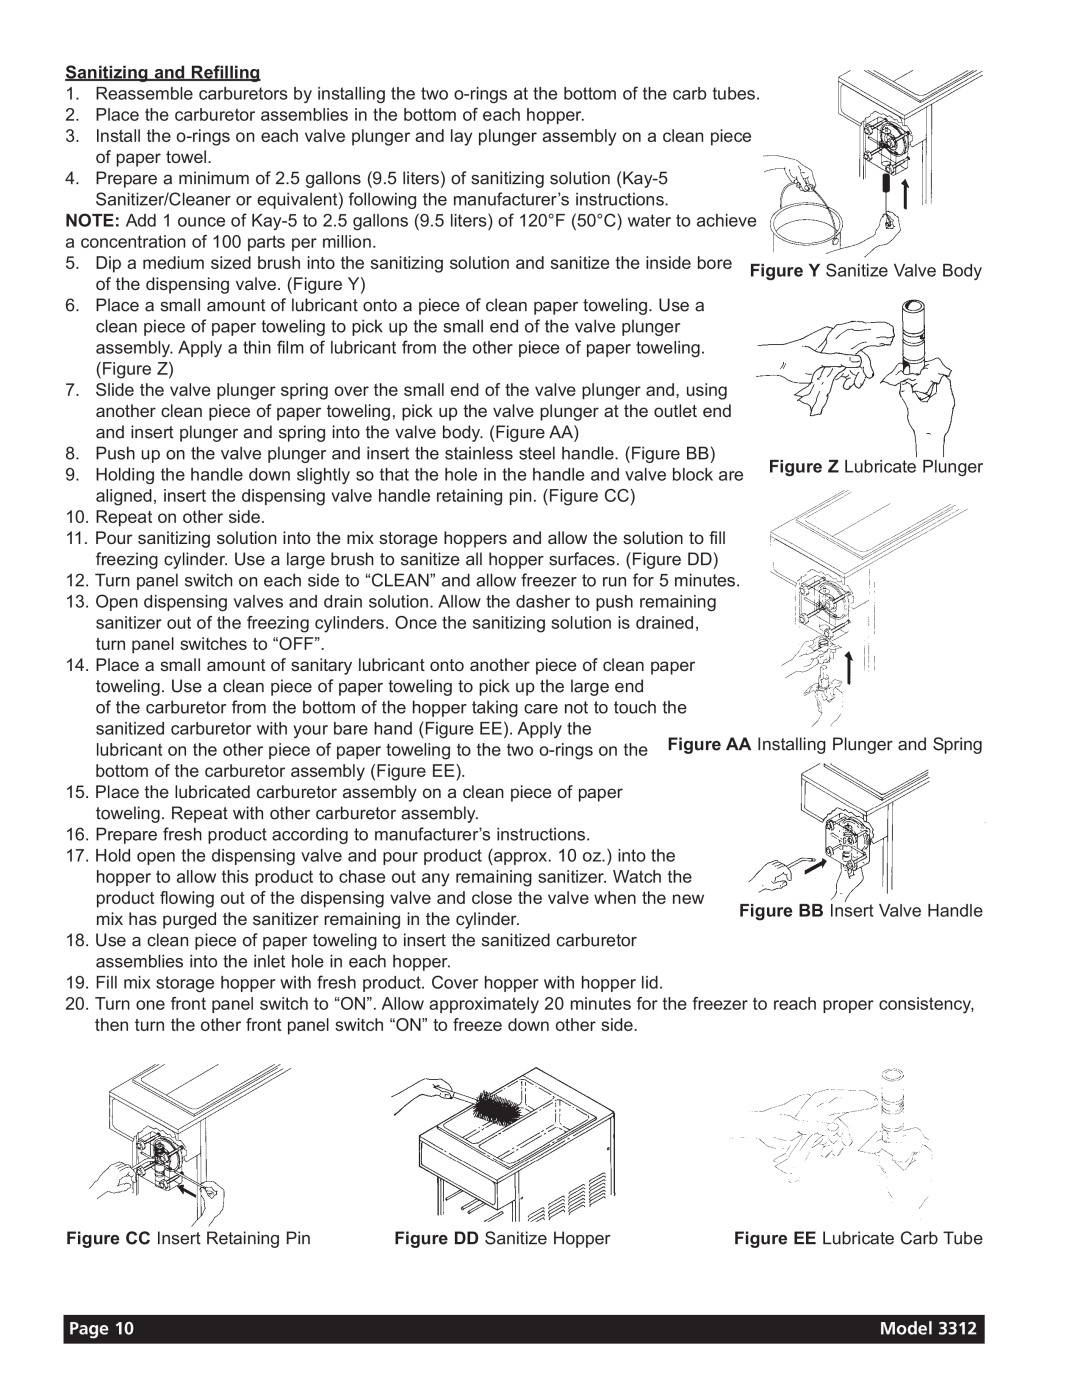 Grindmaster 3311 manual Sanitizing and Refilling, Figure CC Insert Retaining Pin, Figure DD Sanitize Hopper, Page, Model 